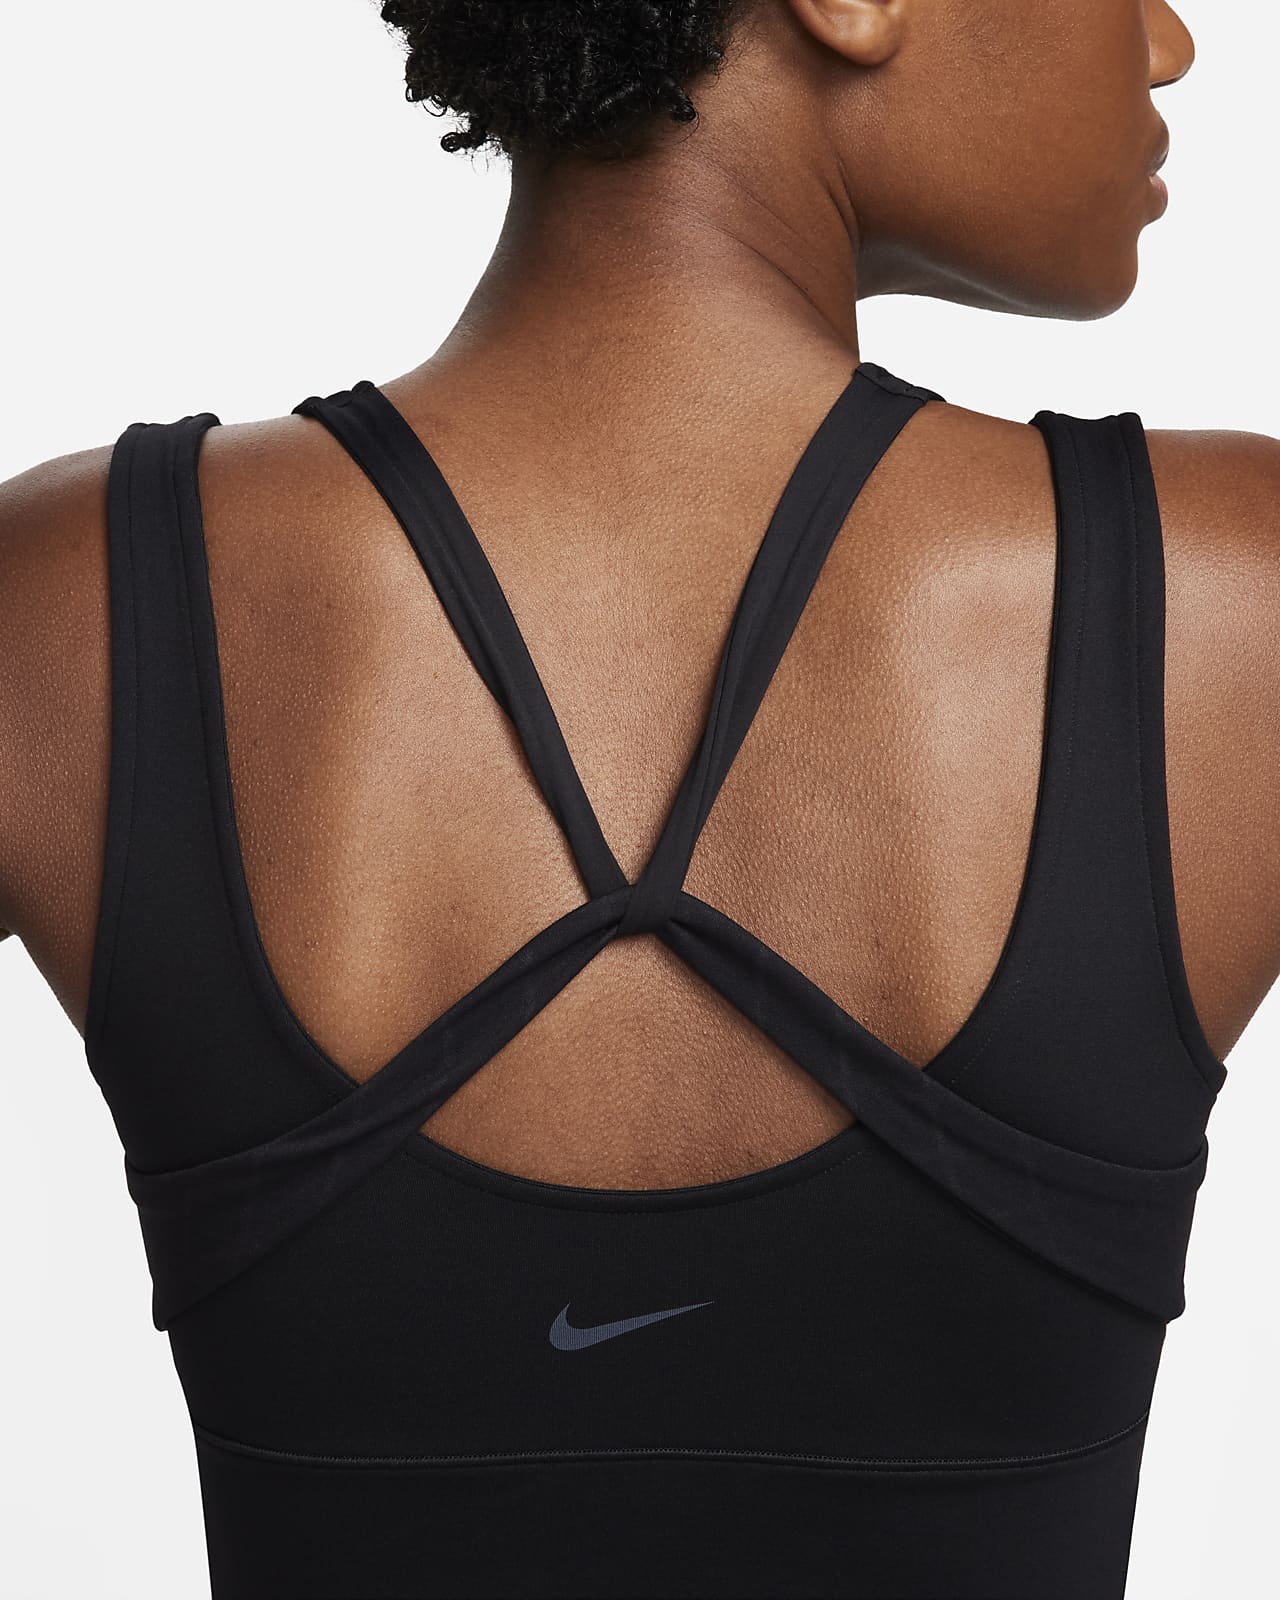 Nike Yoga Dri FIT Luxe - Ropa interior para mujer Sport Yoga Ropa